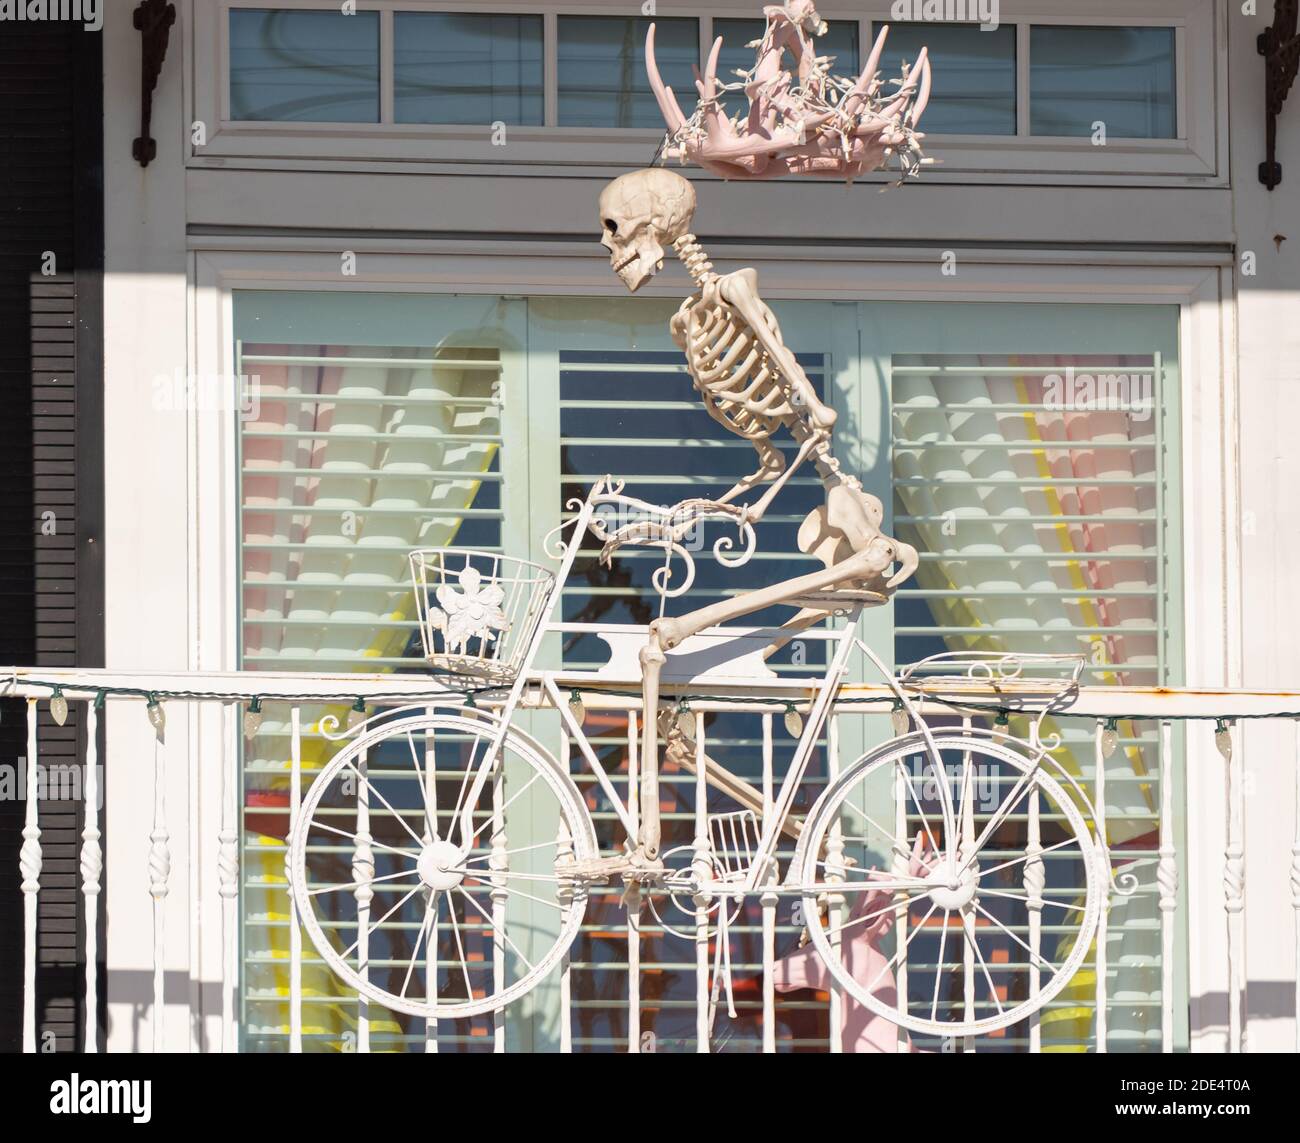 Halloween decoration, skeleton on the bicycle. Selective focus, street photo, travel photo. Stock Photo